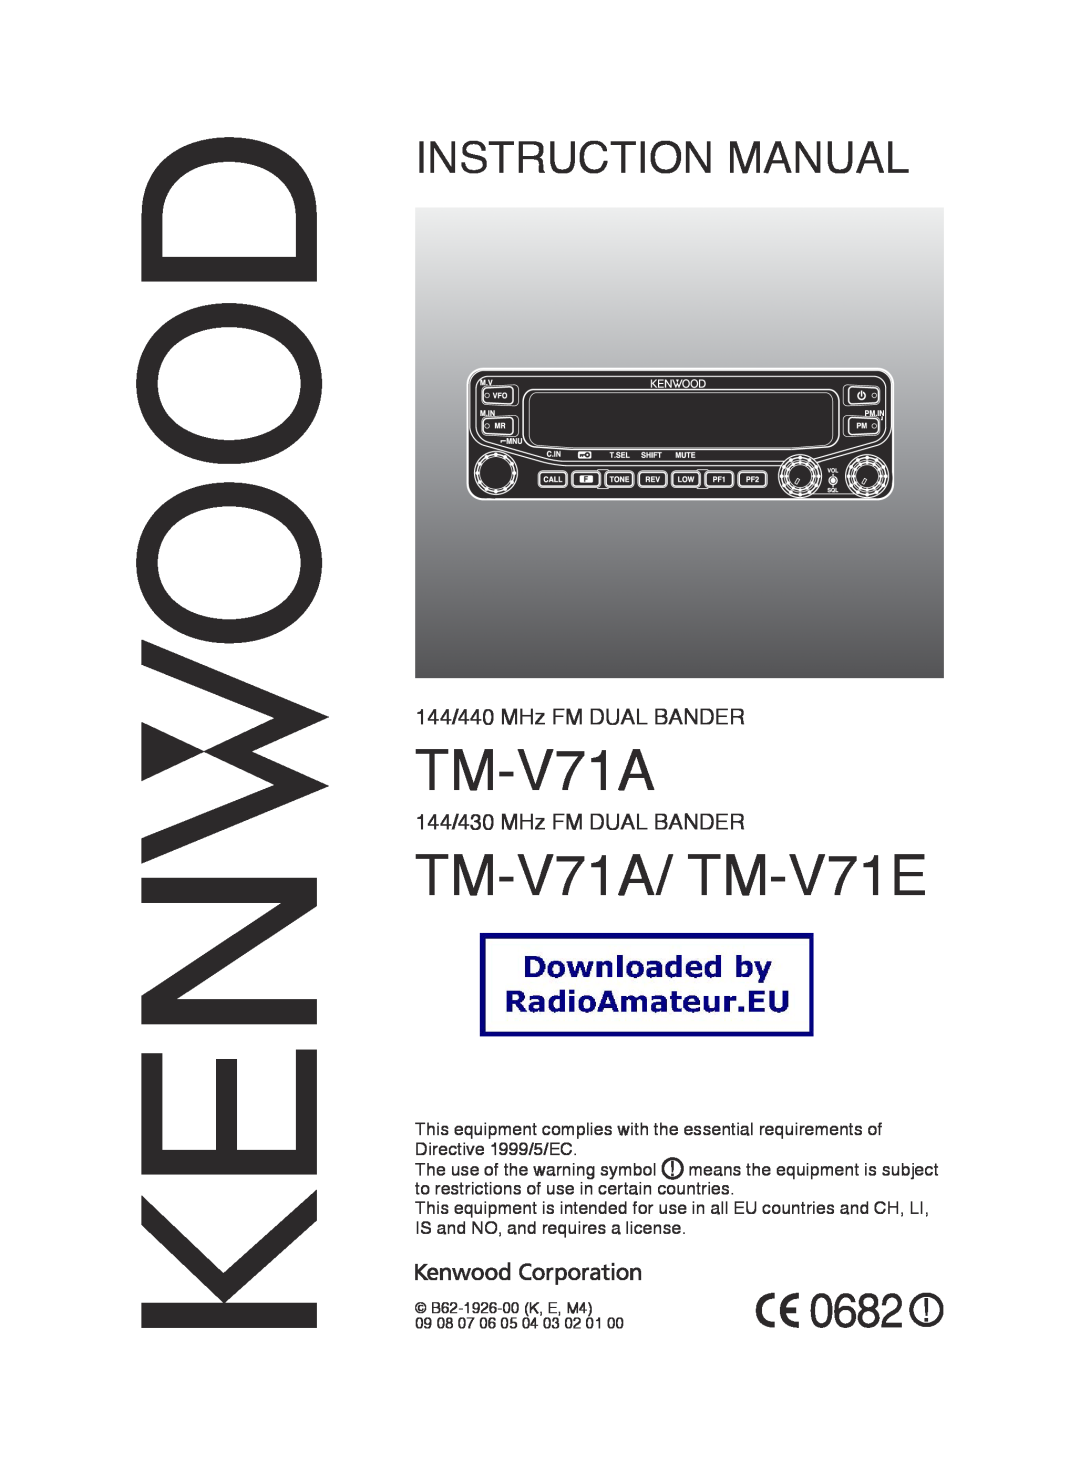 Kenwood instruction manual TM-V71A/ TM-V71E, Instruction Manual 